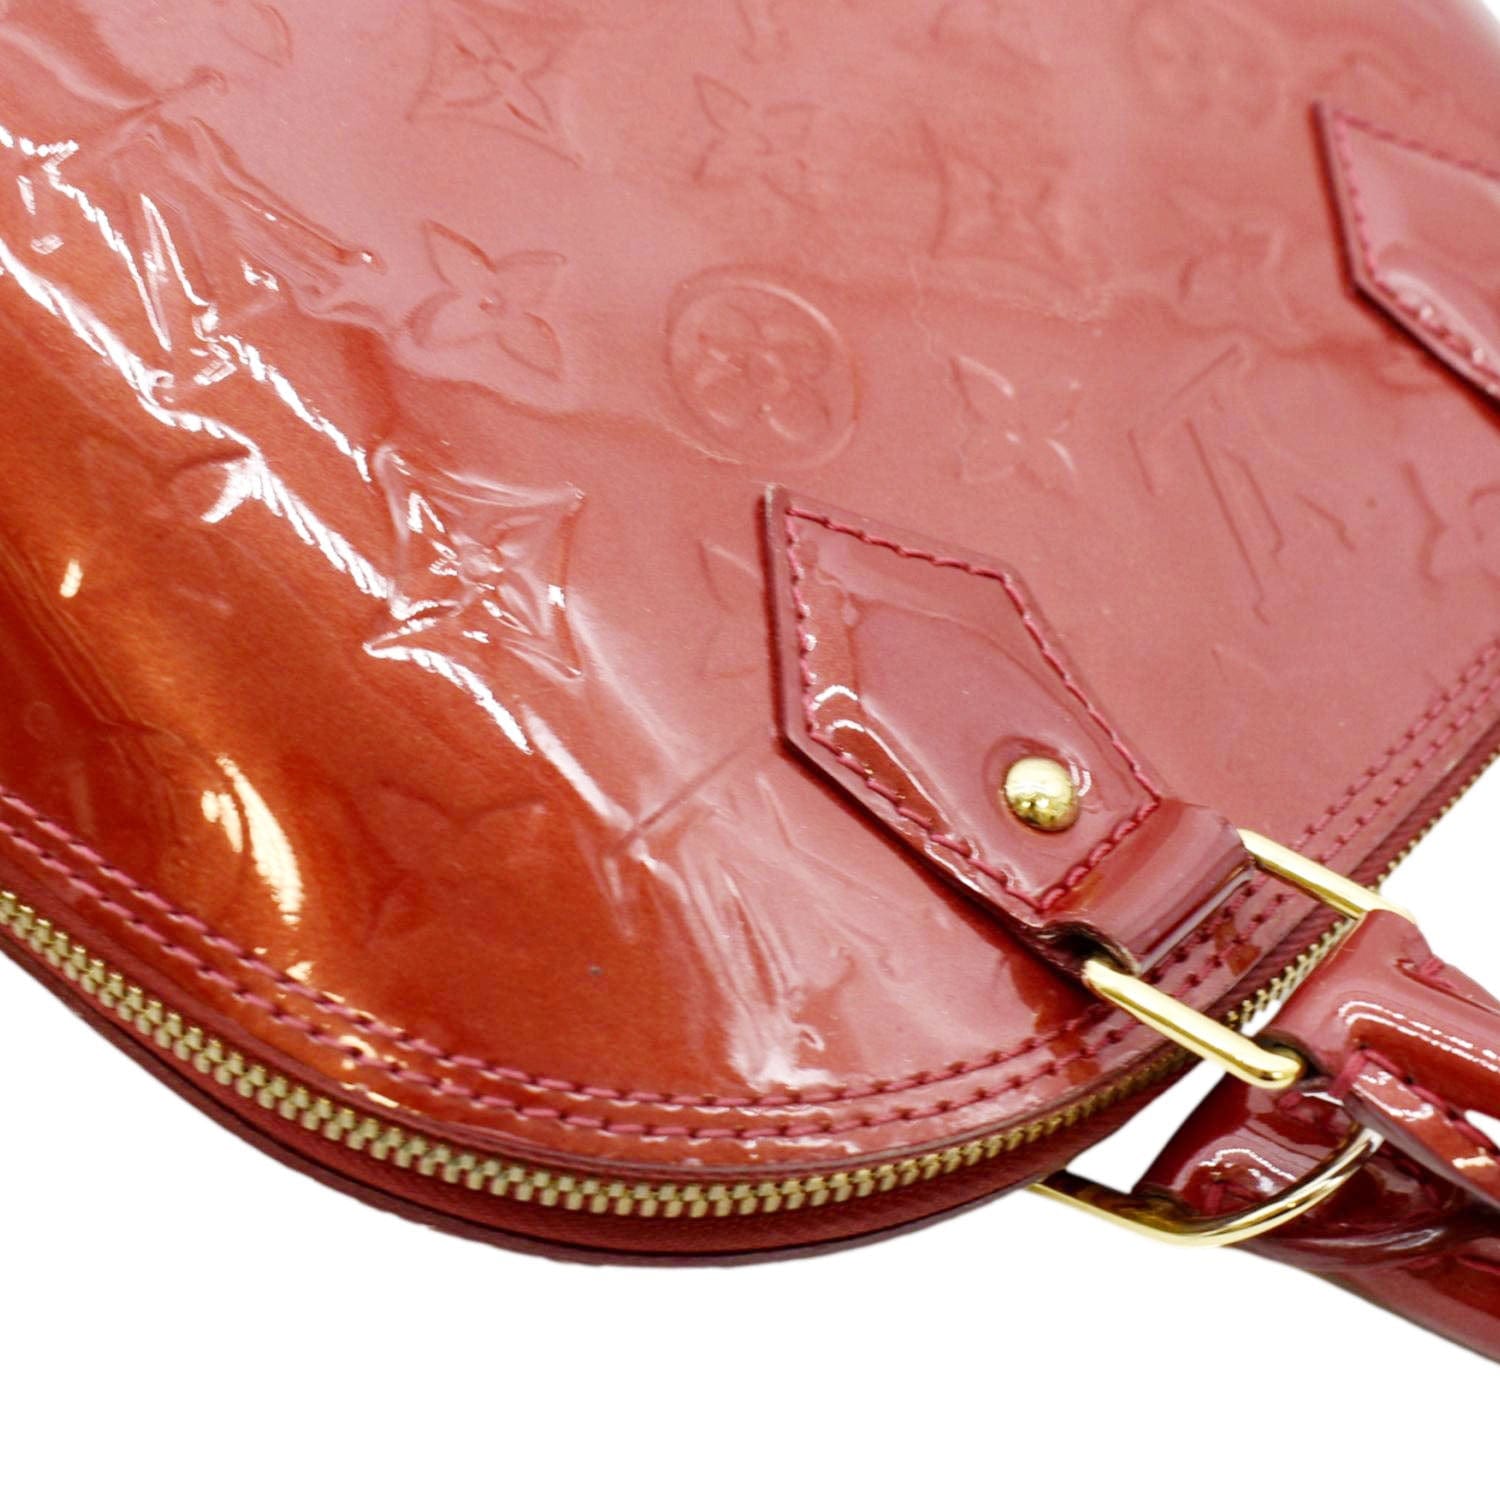 Alma Bb Pink Patent Leather Cross Body Bag